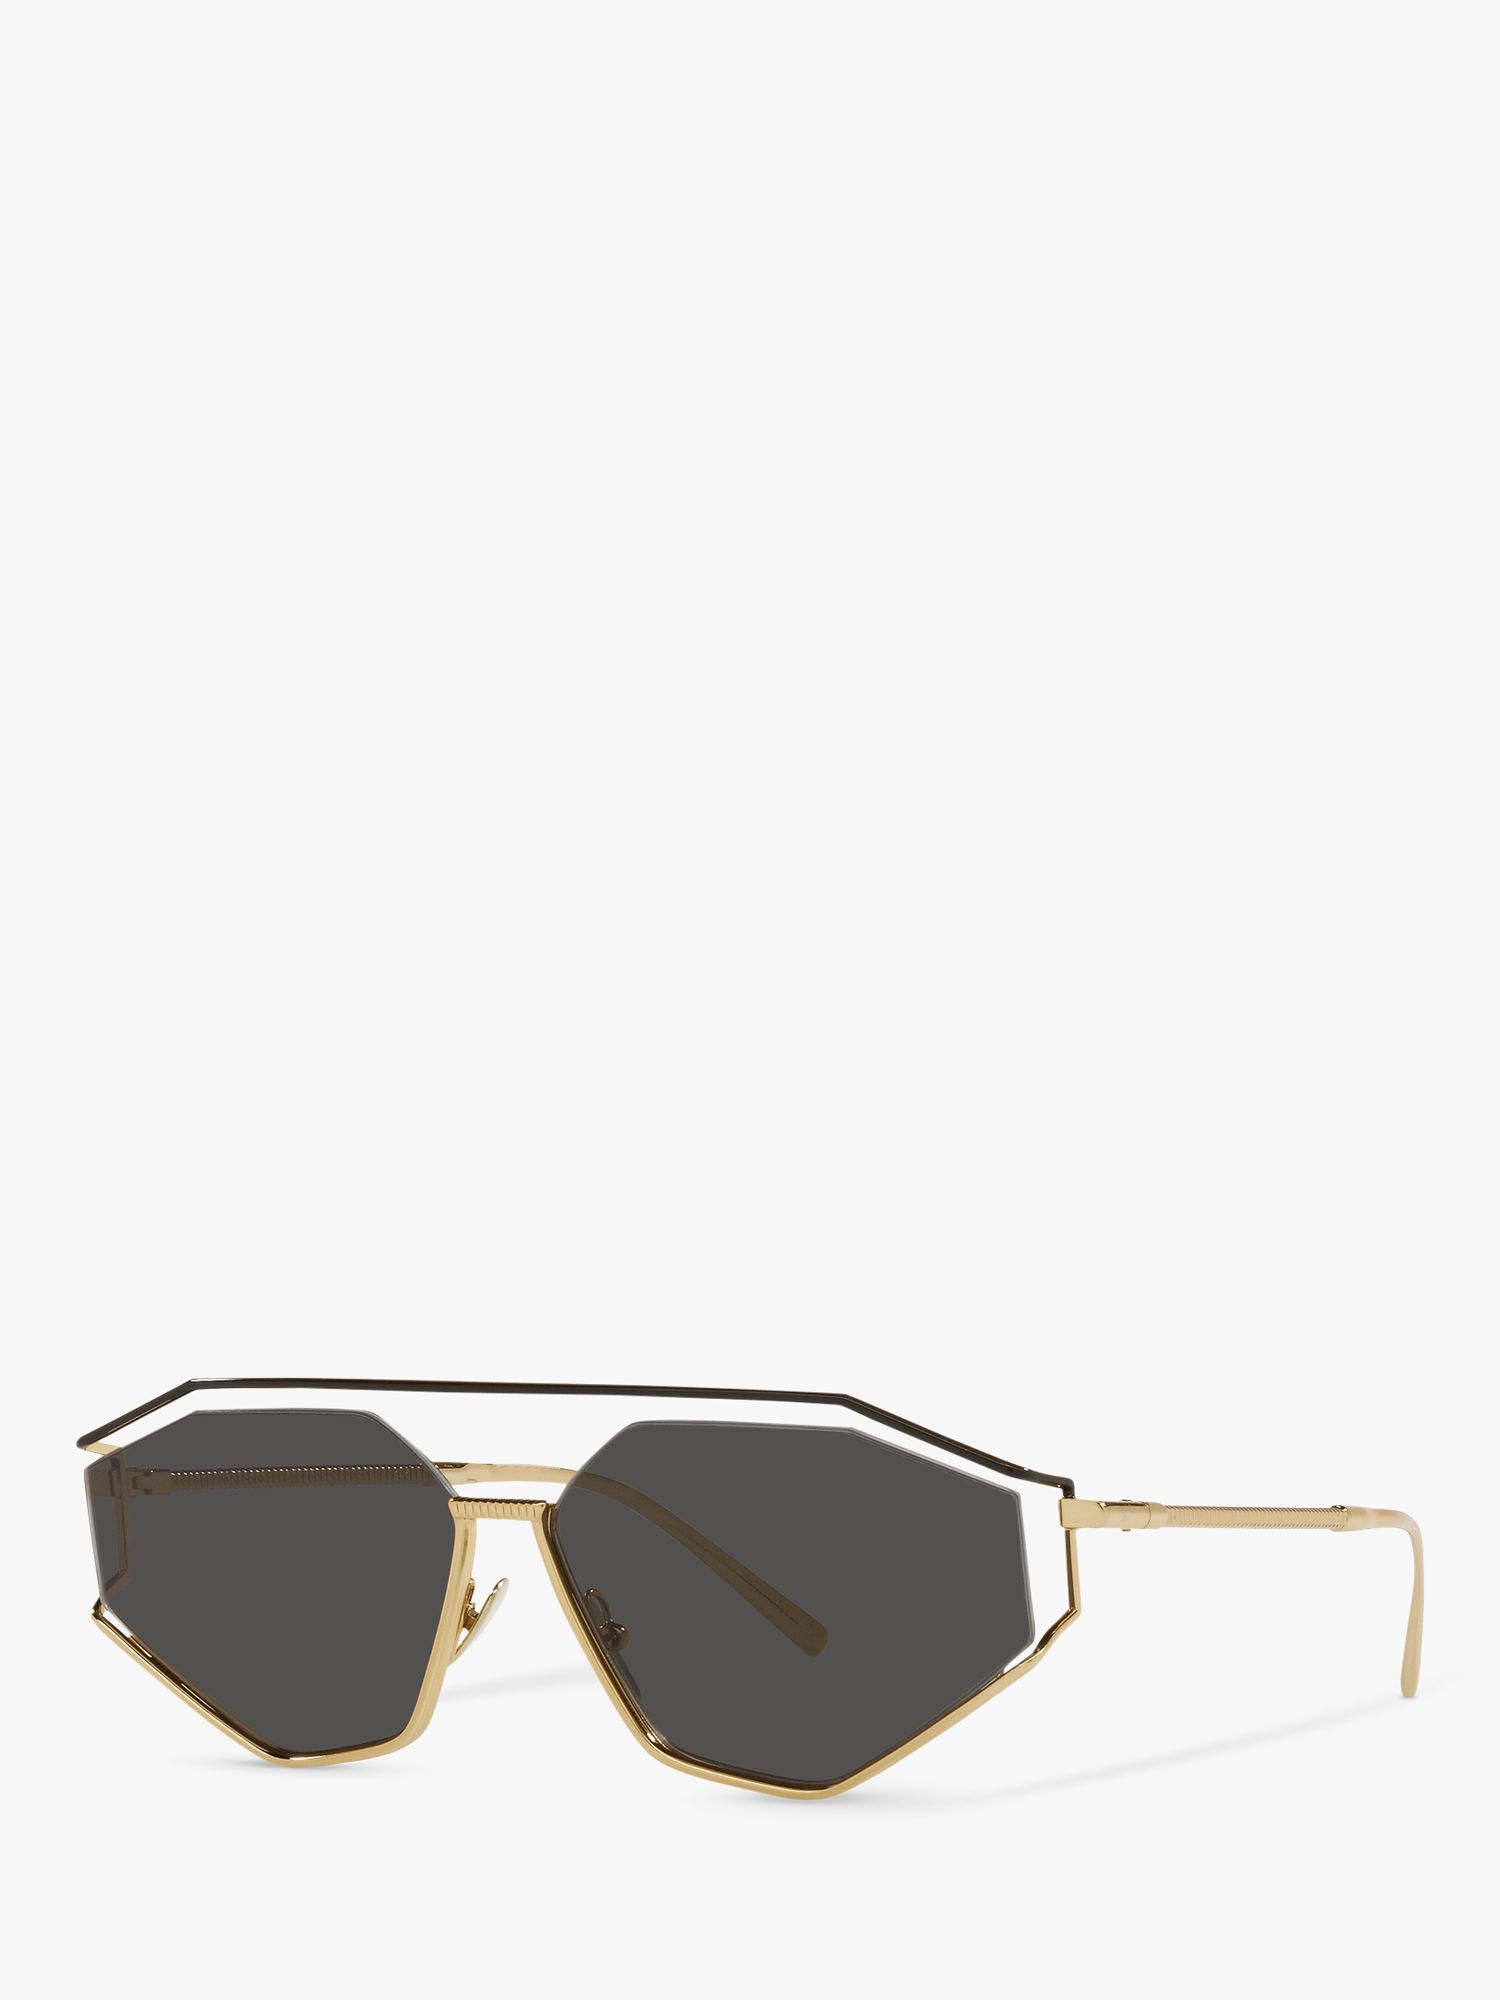 Buy Dolce & Gabbana DG2265 Men's Irregular Sunglasses Online at johnlewis.com